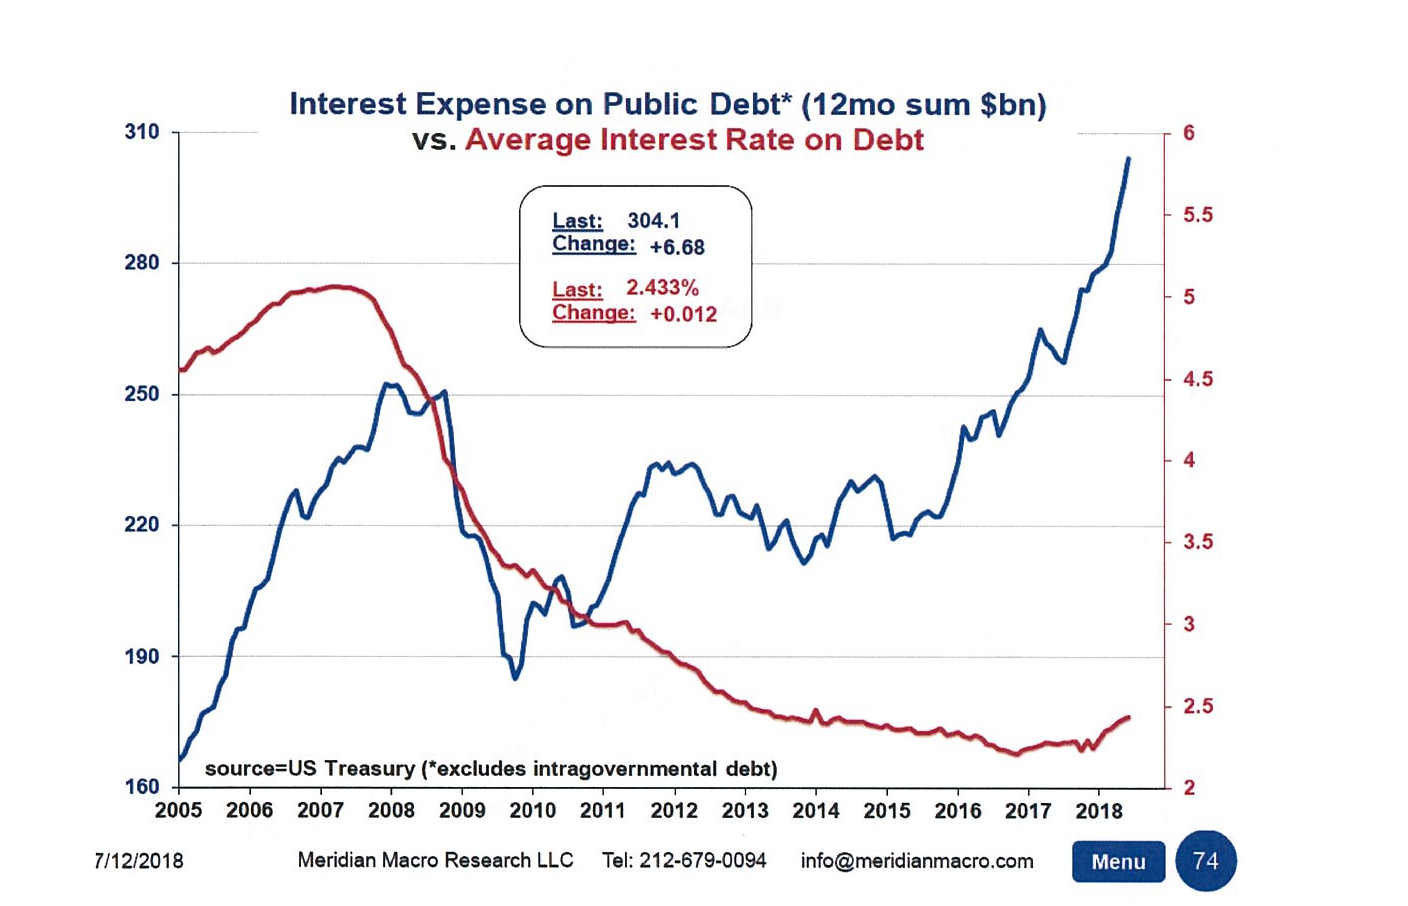 interest expense on public debt vs average interest rate on debt